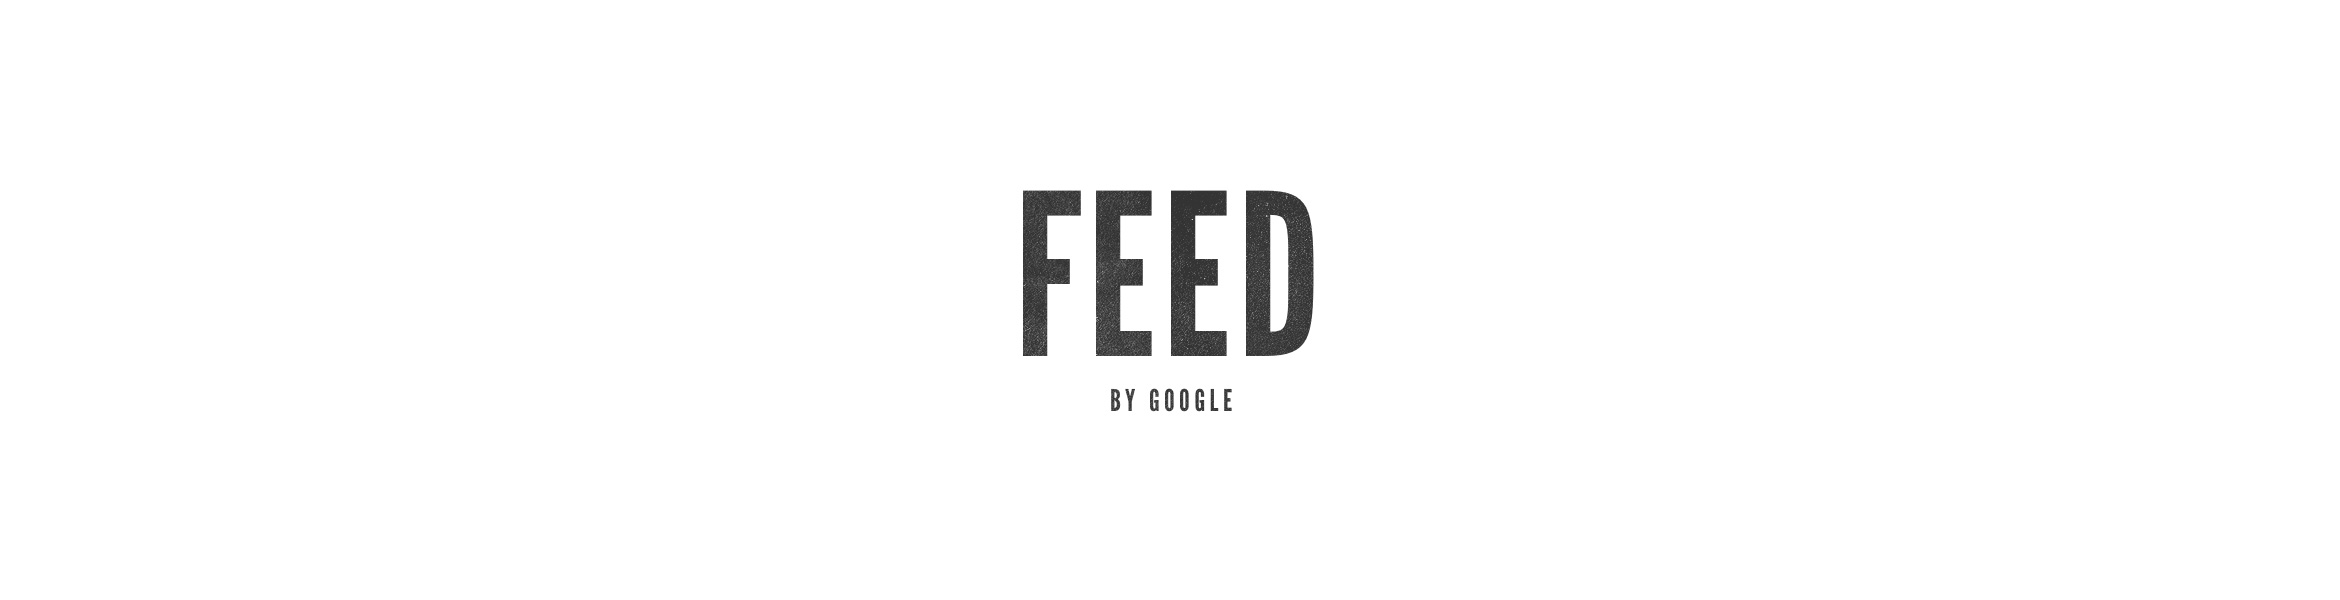 GoogleFeedTitle-RET